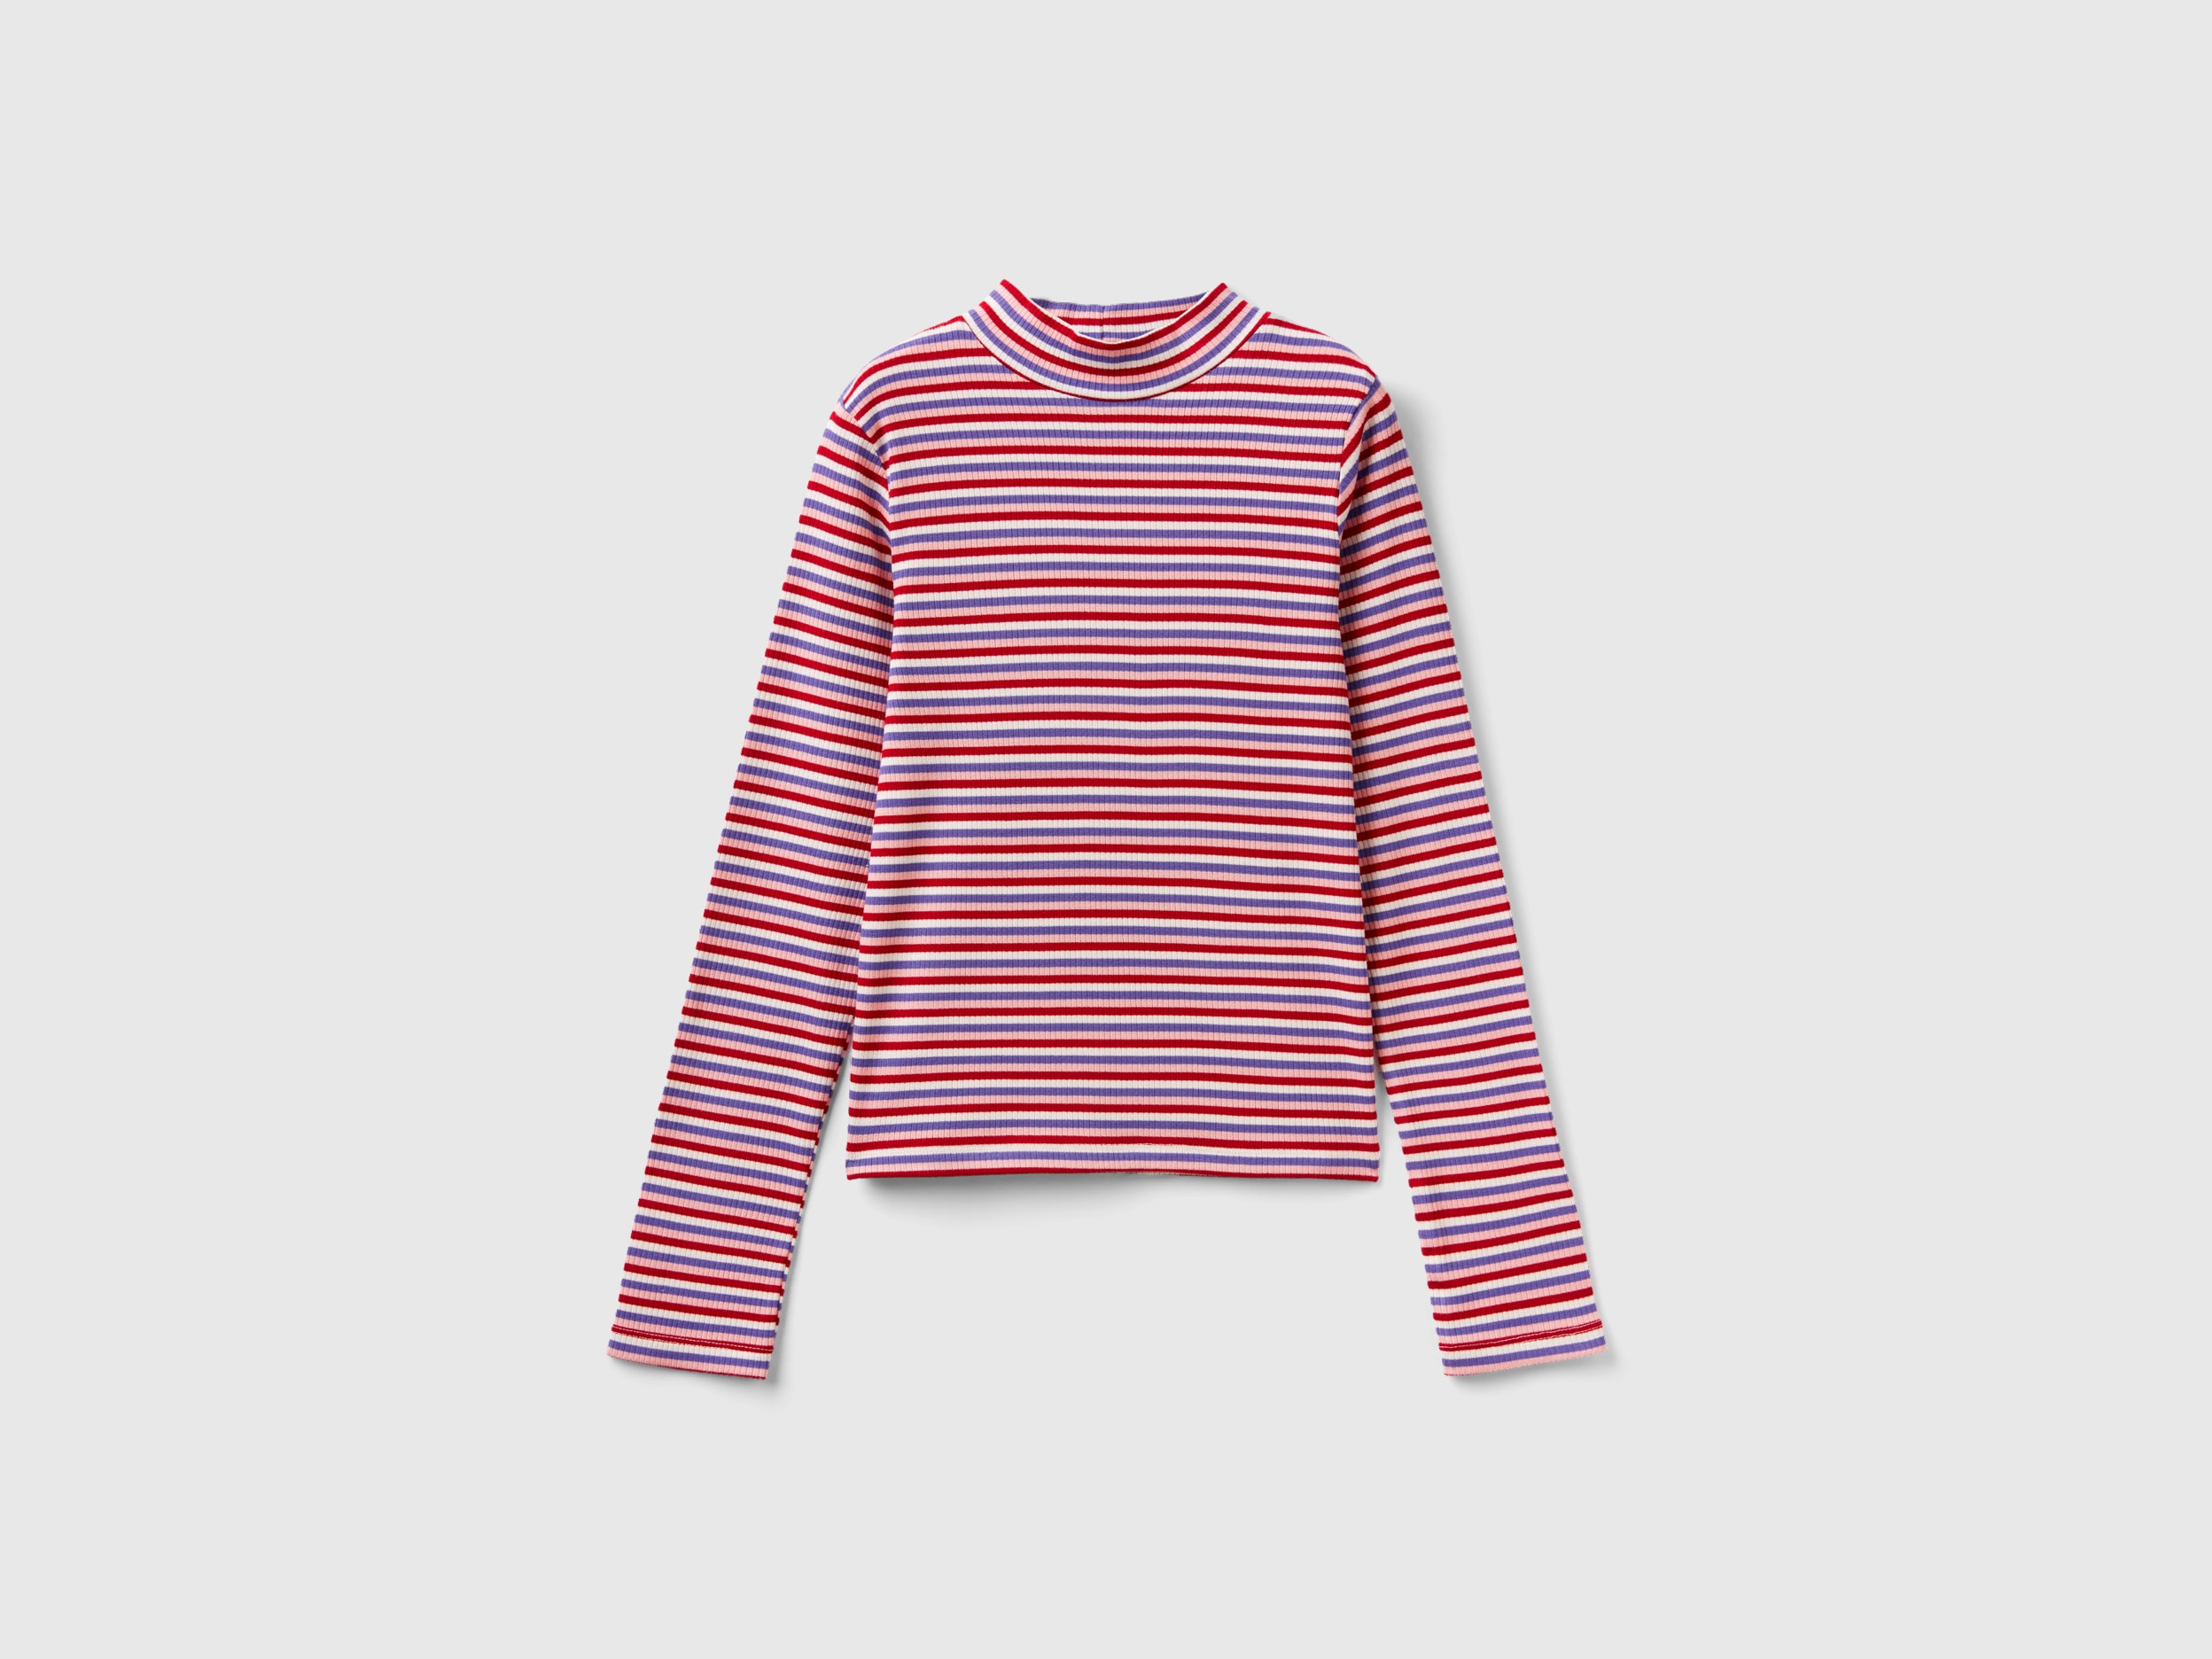 Benetton, Striped Turtleneck T-shirt, size M, Multi-color, Kids